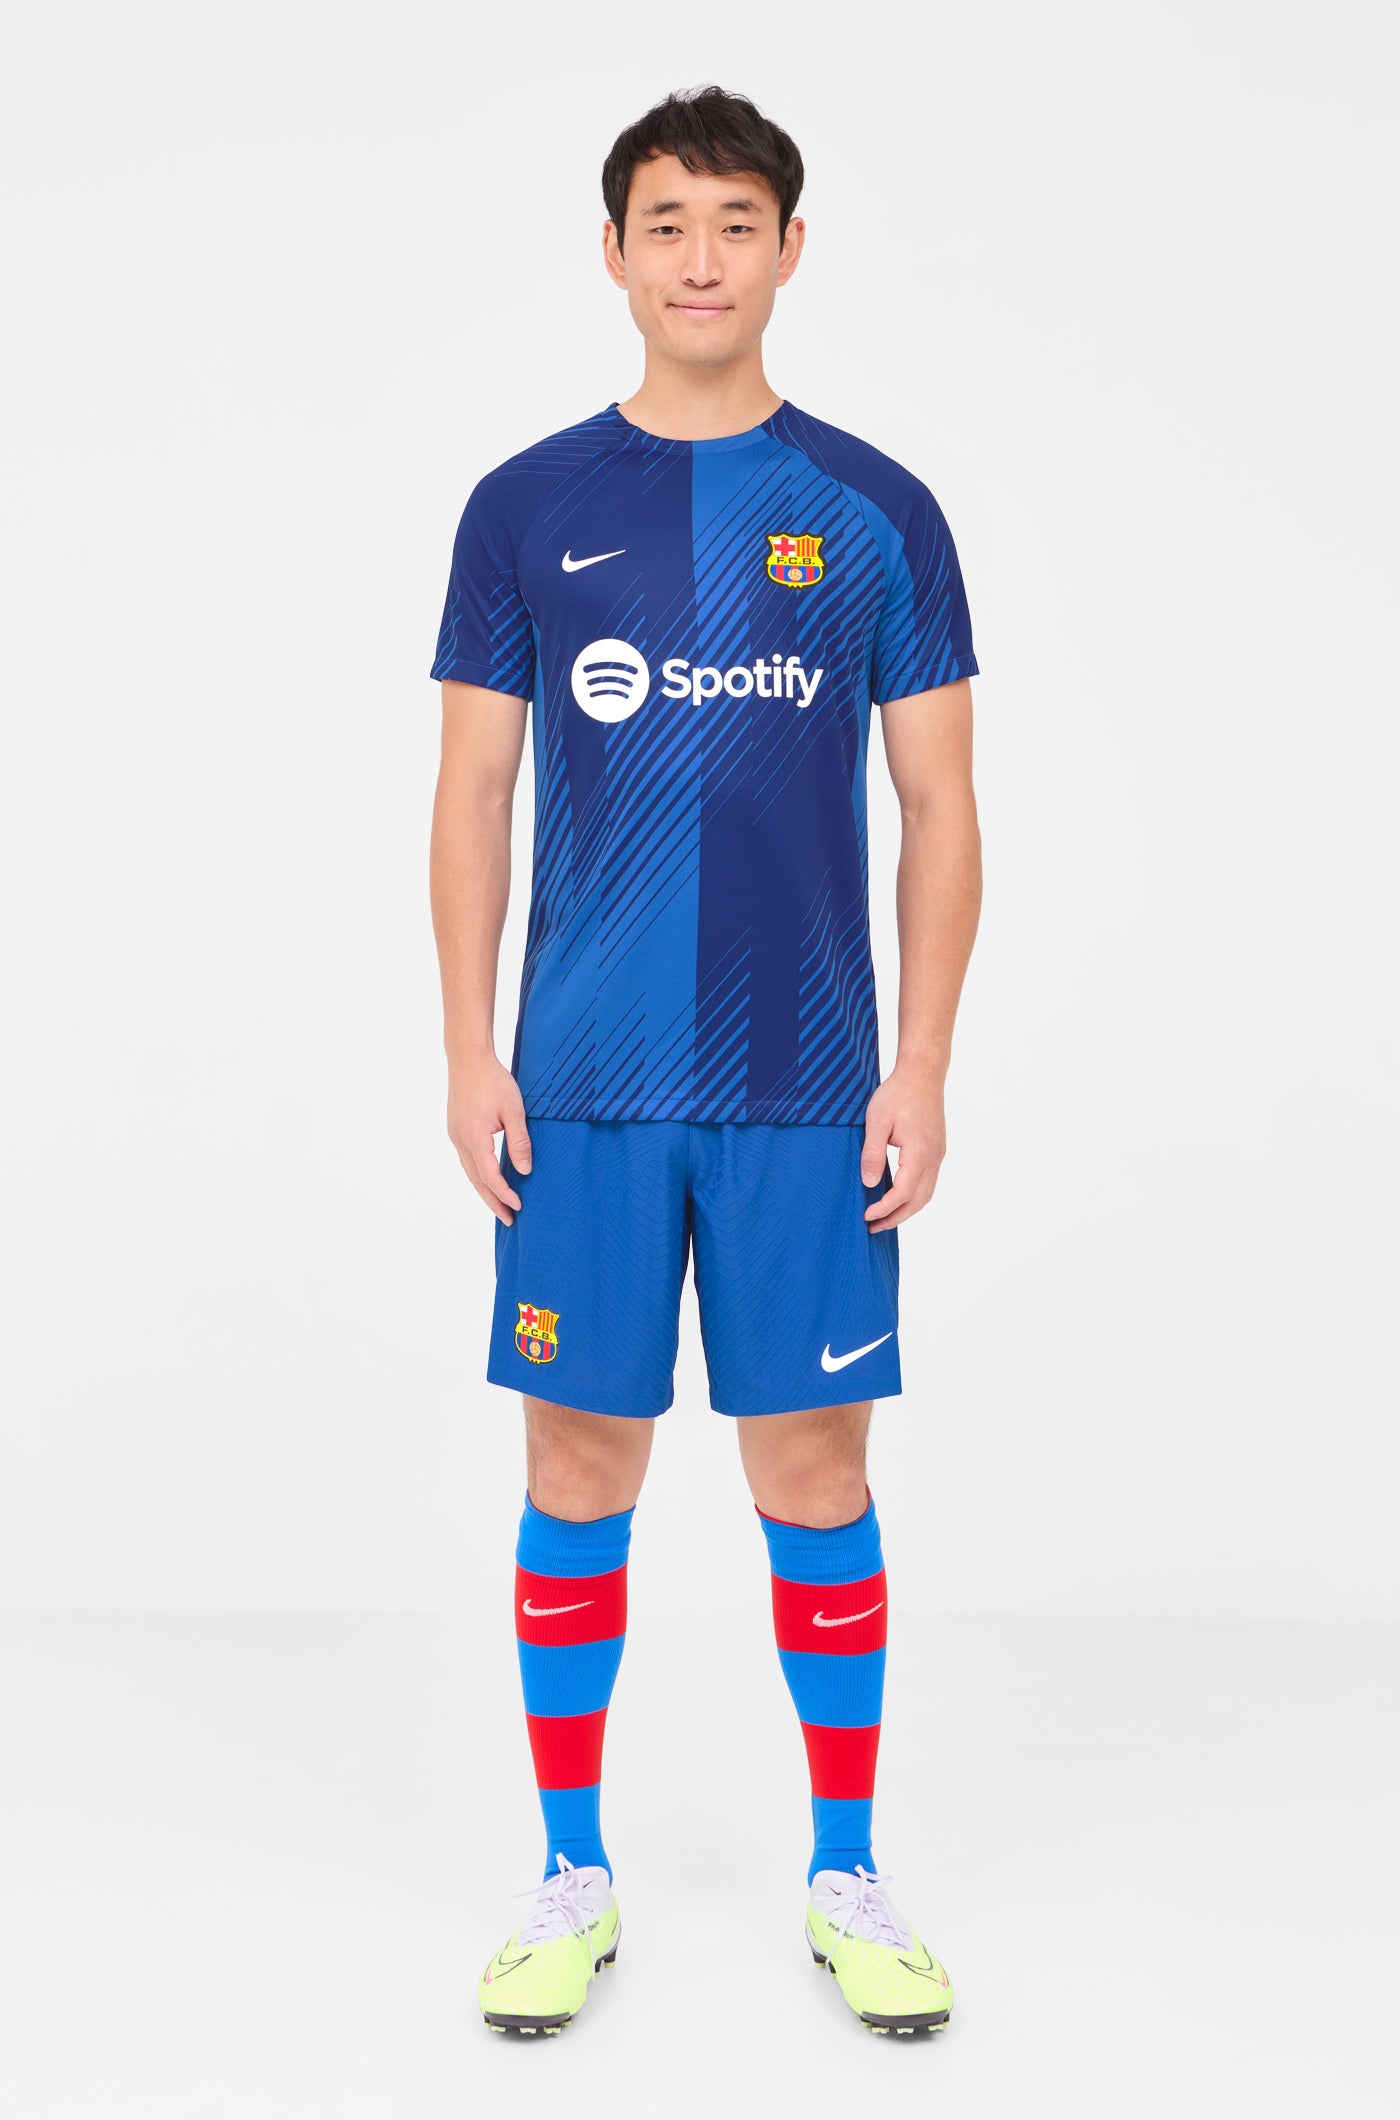 FC Barcelona 2019/20 Away Kit by Nike